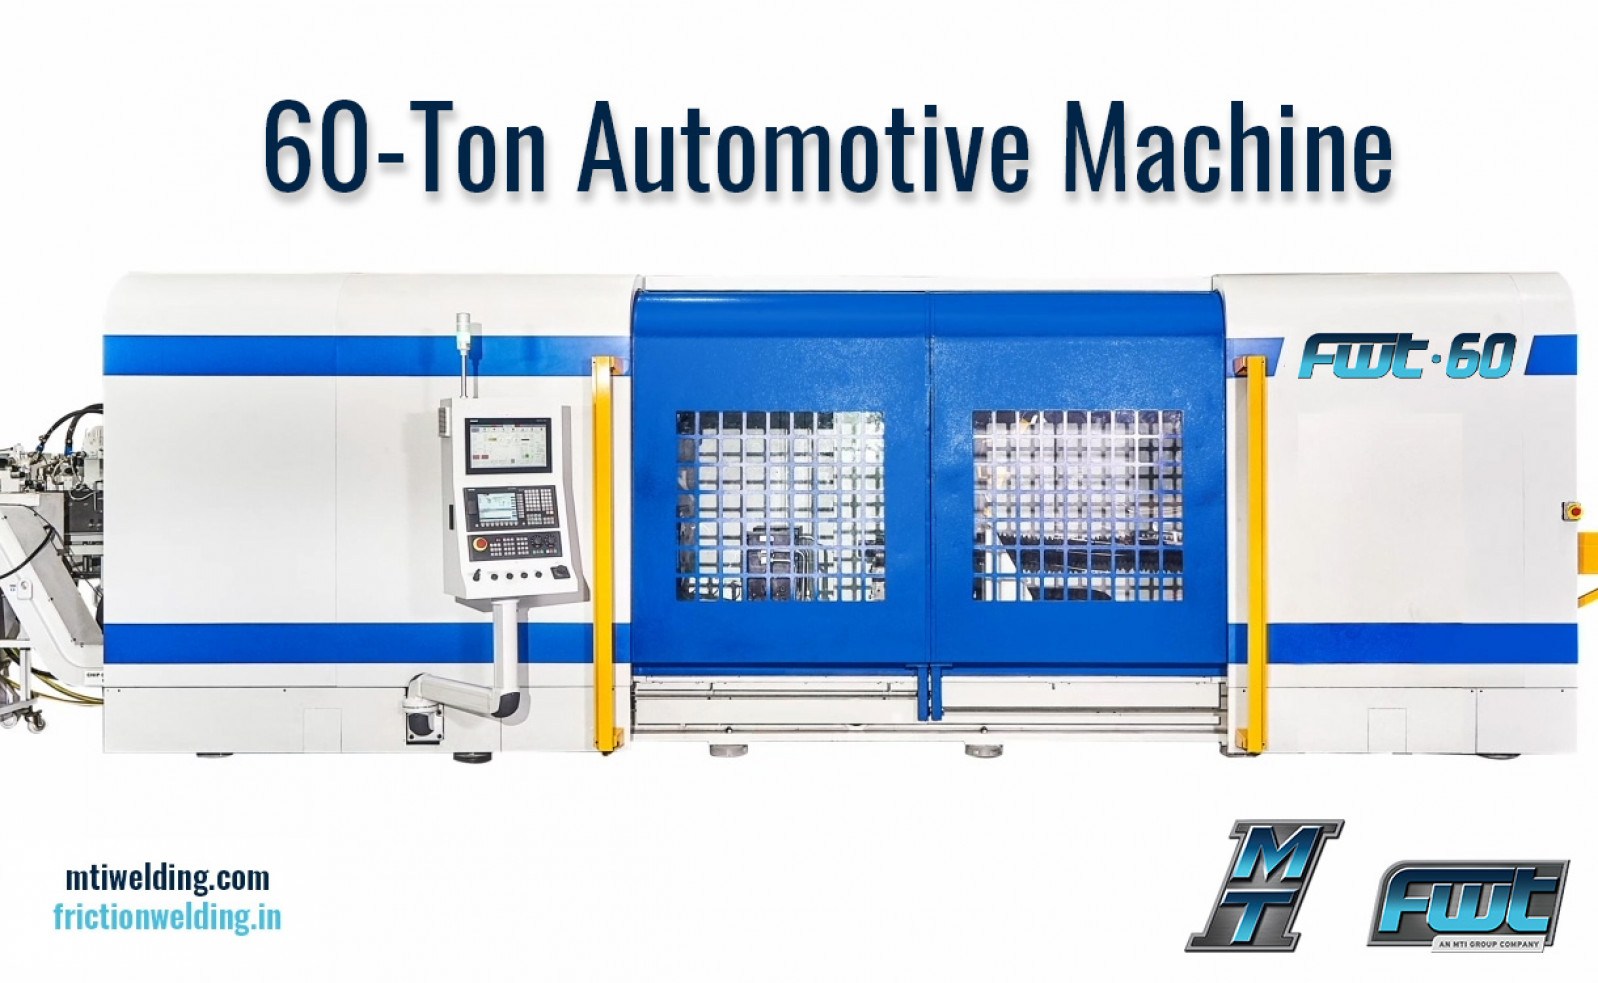 MTI Delivered 60-Ton Machine to Automotive Supplie...